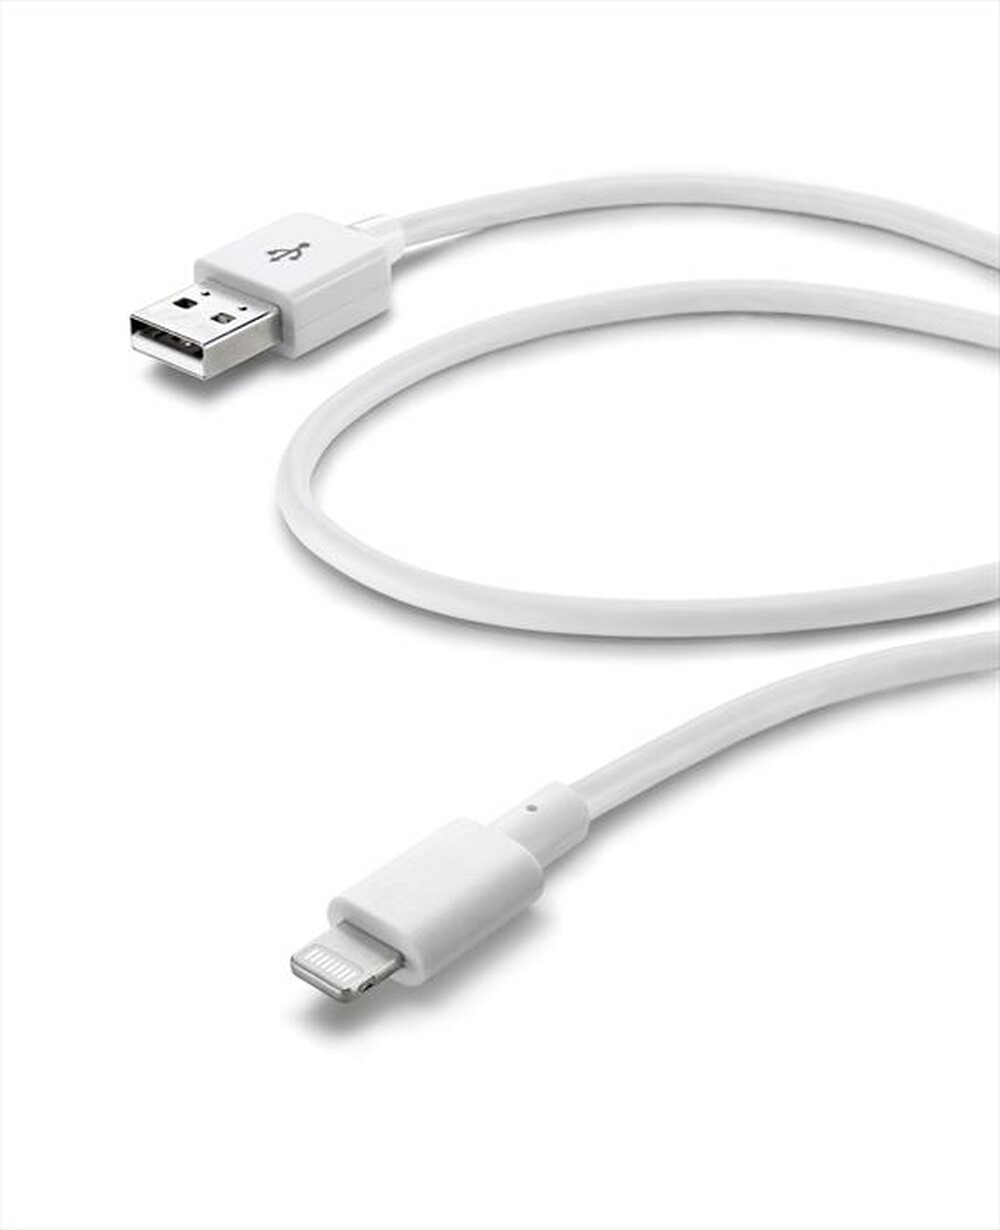 "CELLULARLINE - Cavo connettore LIGHTNING-USB per iPhone 5 - Bianco"